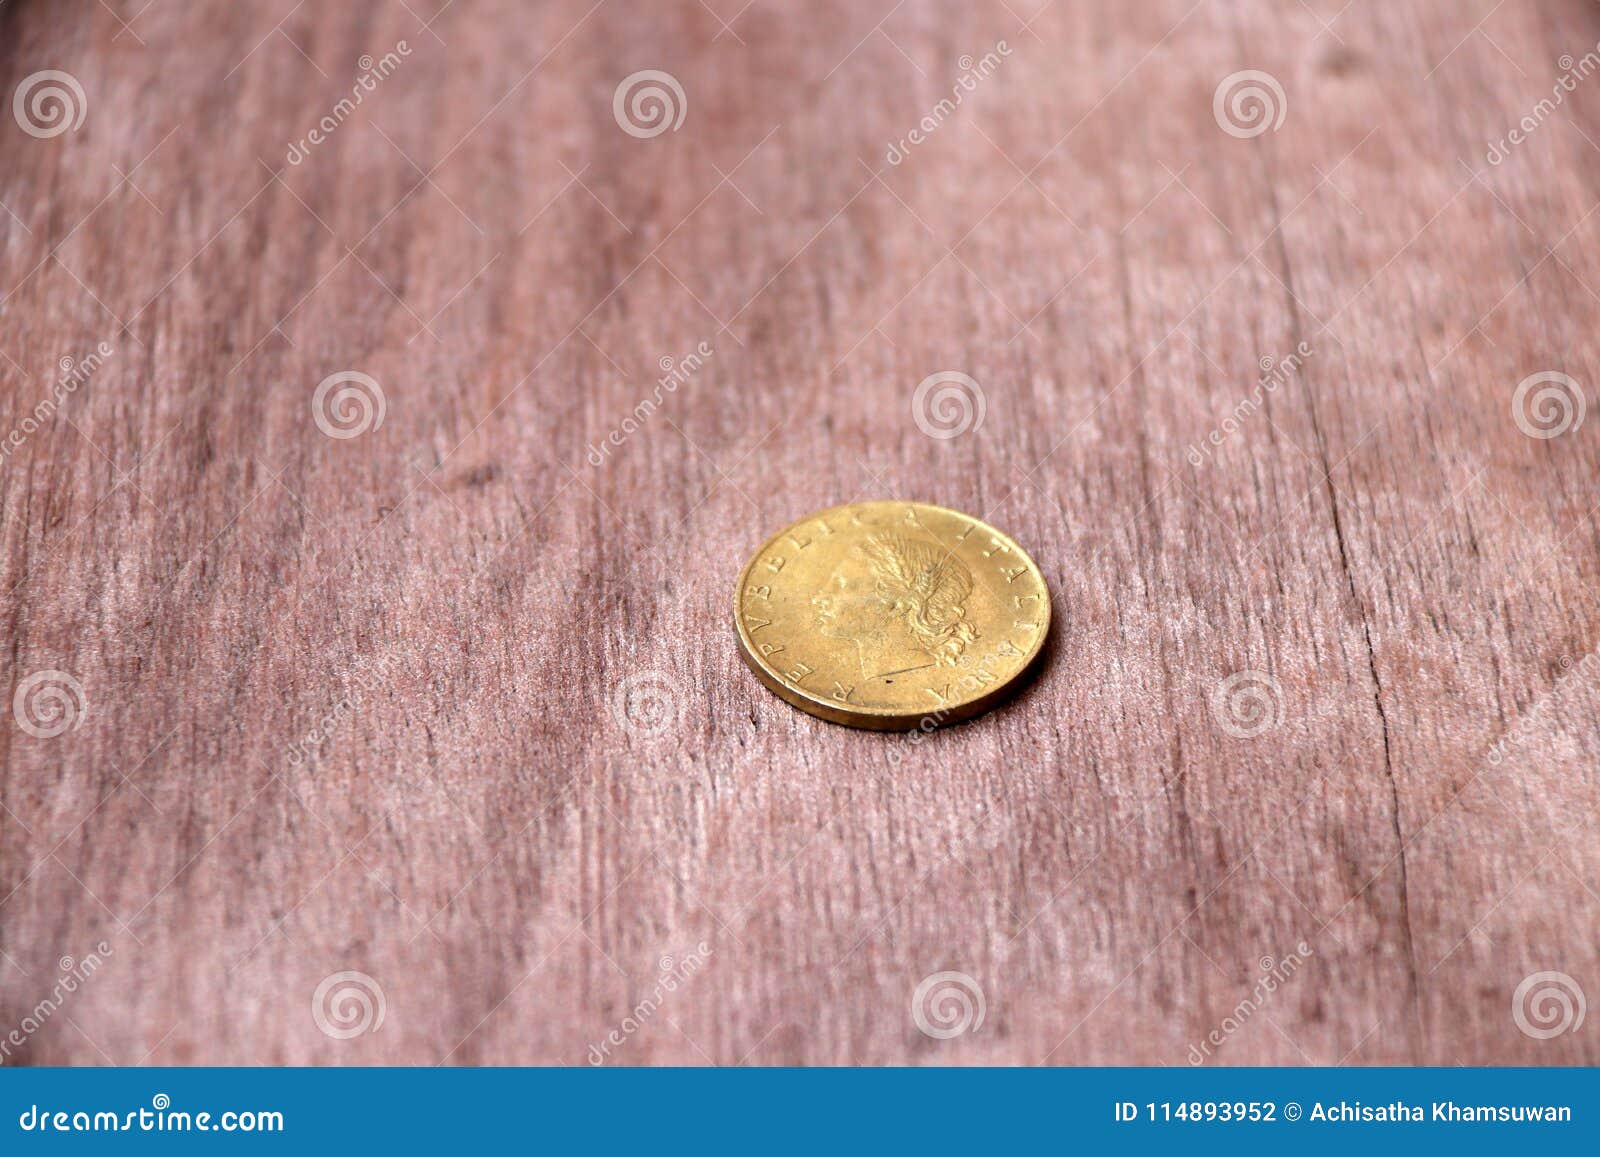 repvbblica italiana, aluminium-bronze coin of italy on the wooden floor.